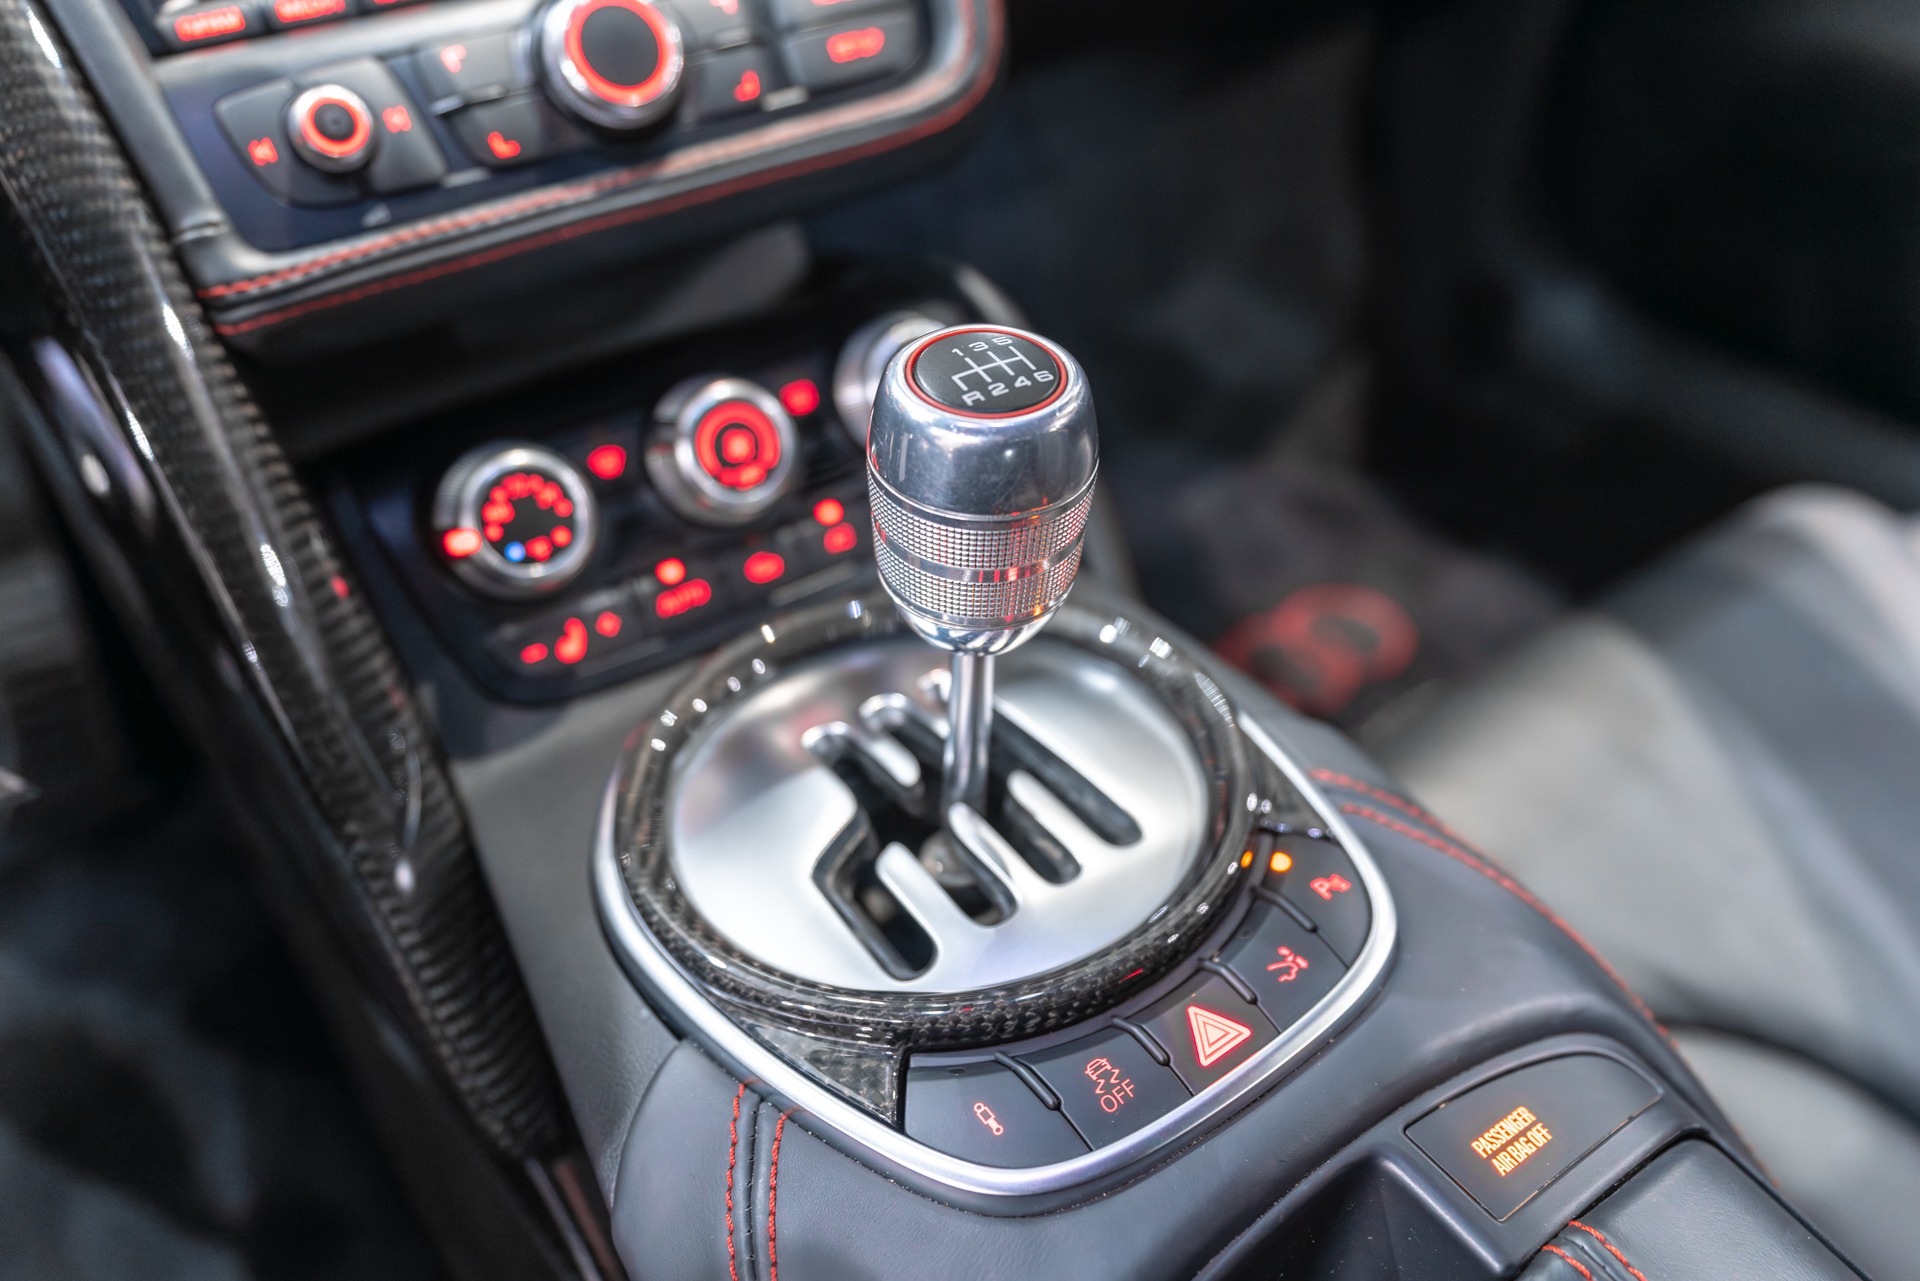 Used-2012-Audi-R8-52-quattro-Coupe-6-Speed-Manual-Ceramic-Brakes-Capristo-Exhaust-LOADED